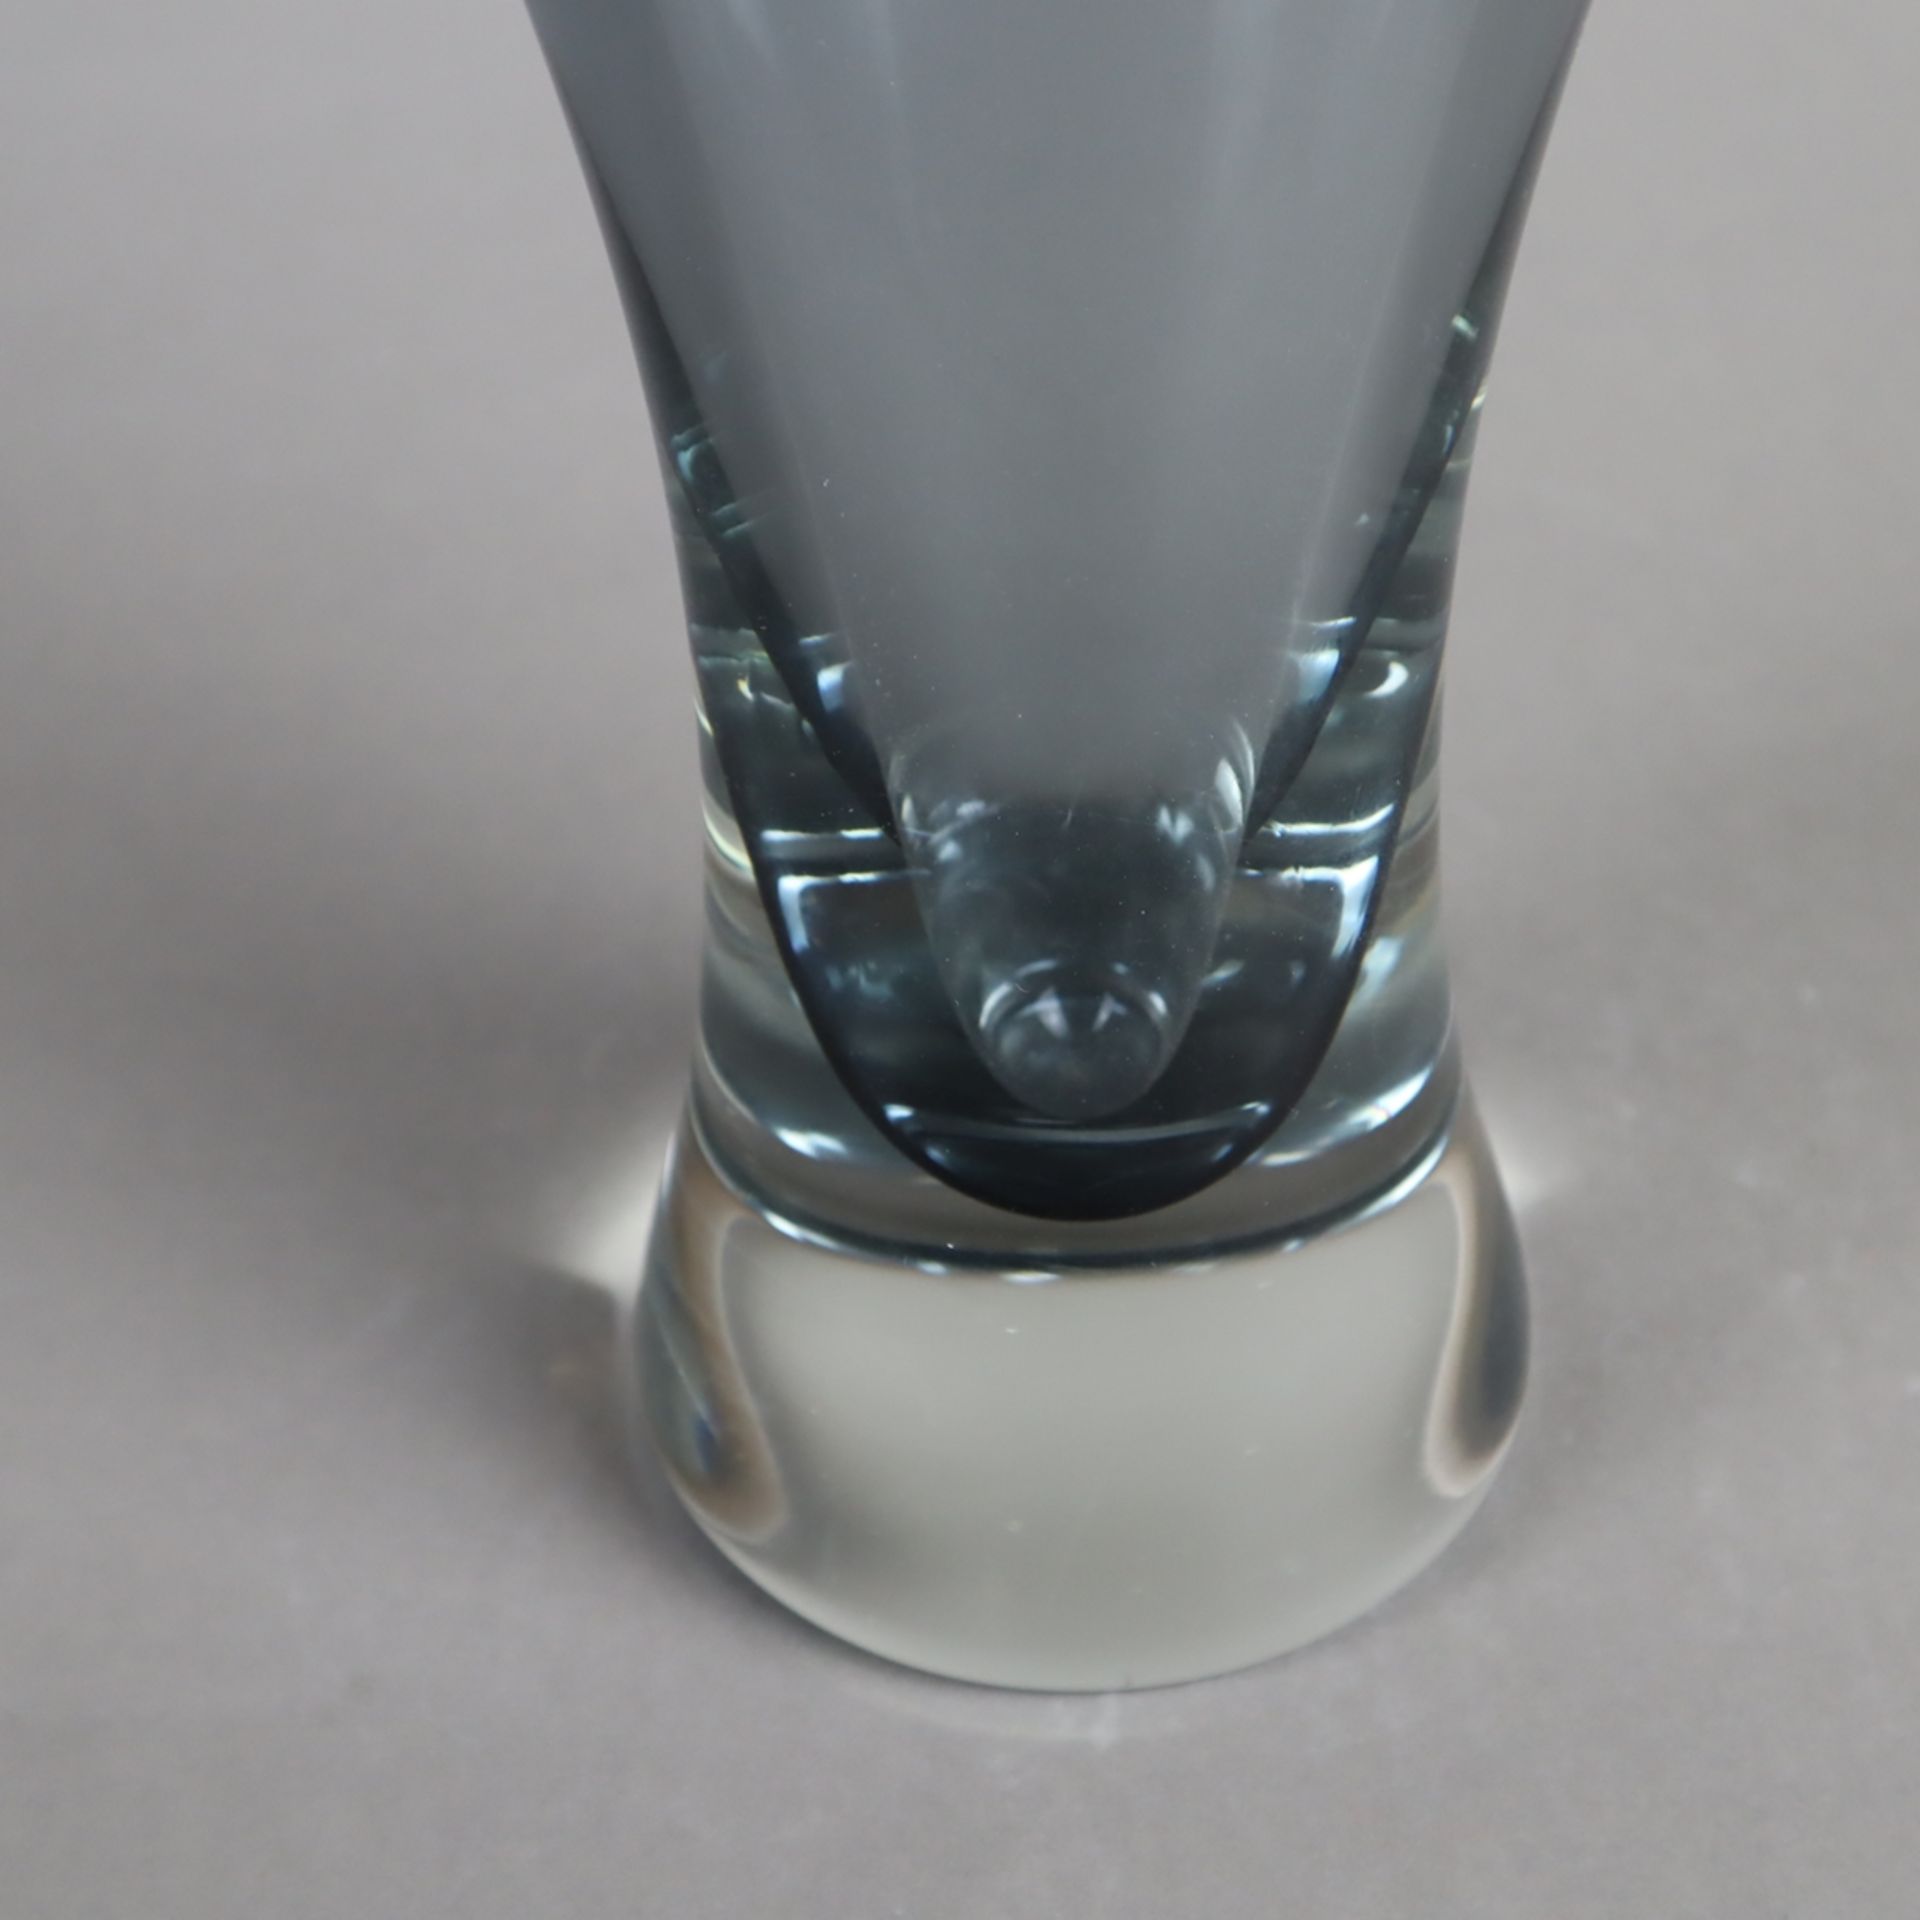 Glasvase - Formia, Murano, farbloses Glas, rauchblau unterfangen, Keulenform, schmale Mündung seitl - Image 4 of 6